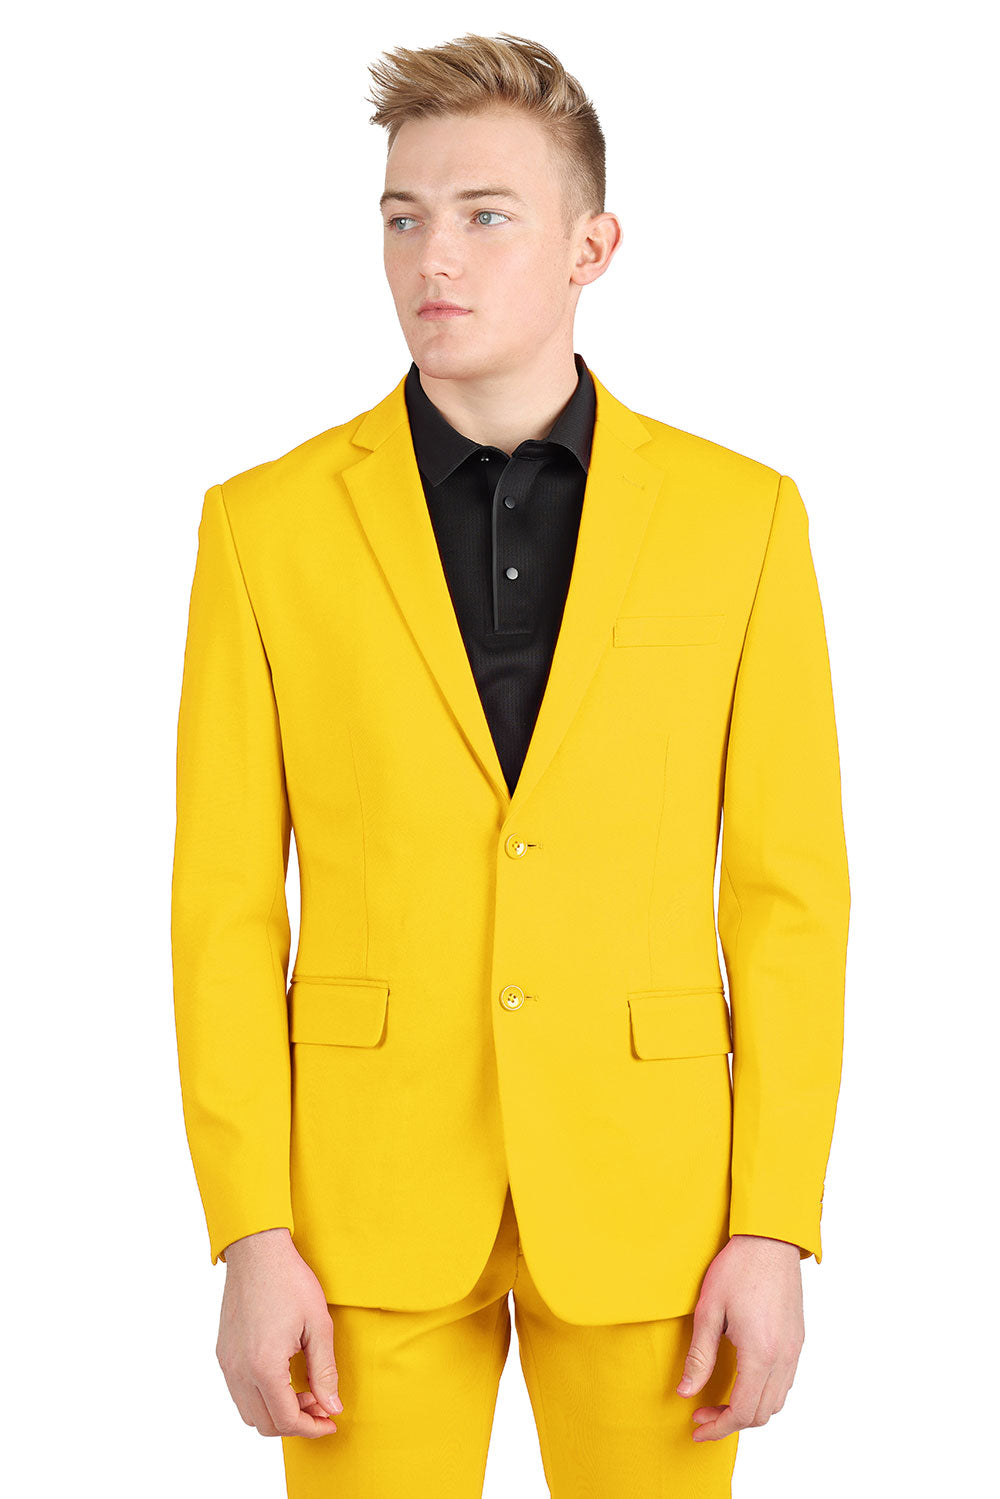 BARABAS Men's Brushed Cotton Notched Lapel Matt Suit 3SU02 Yellow